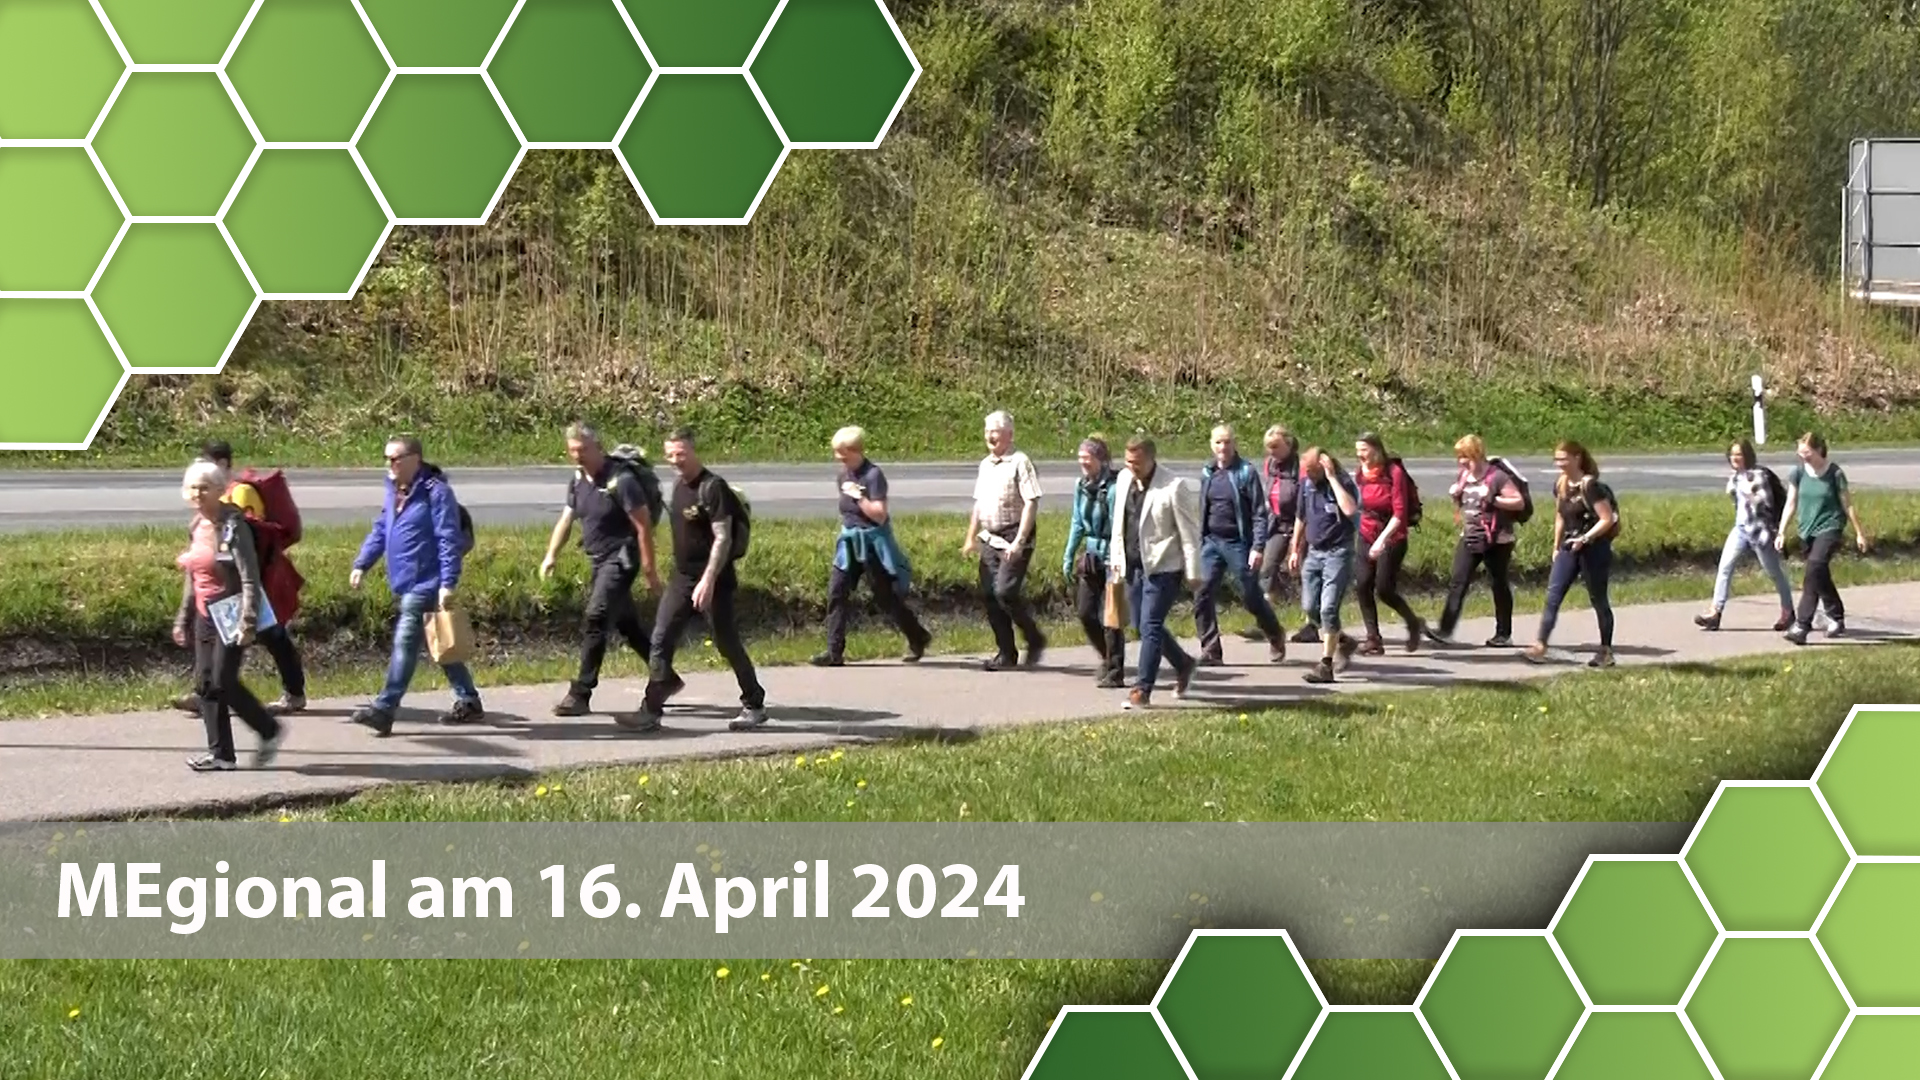 MEgional am 16. April 2024 mit dem Pilger- & Wanderevent in Marienberg